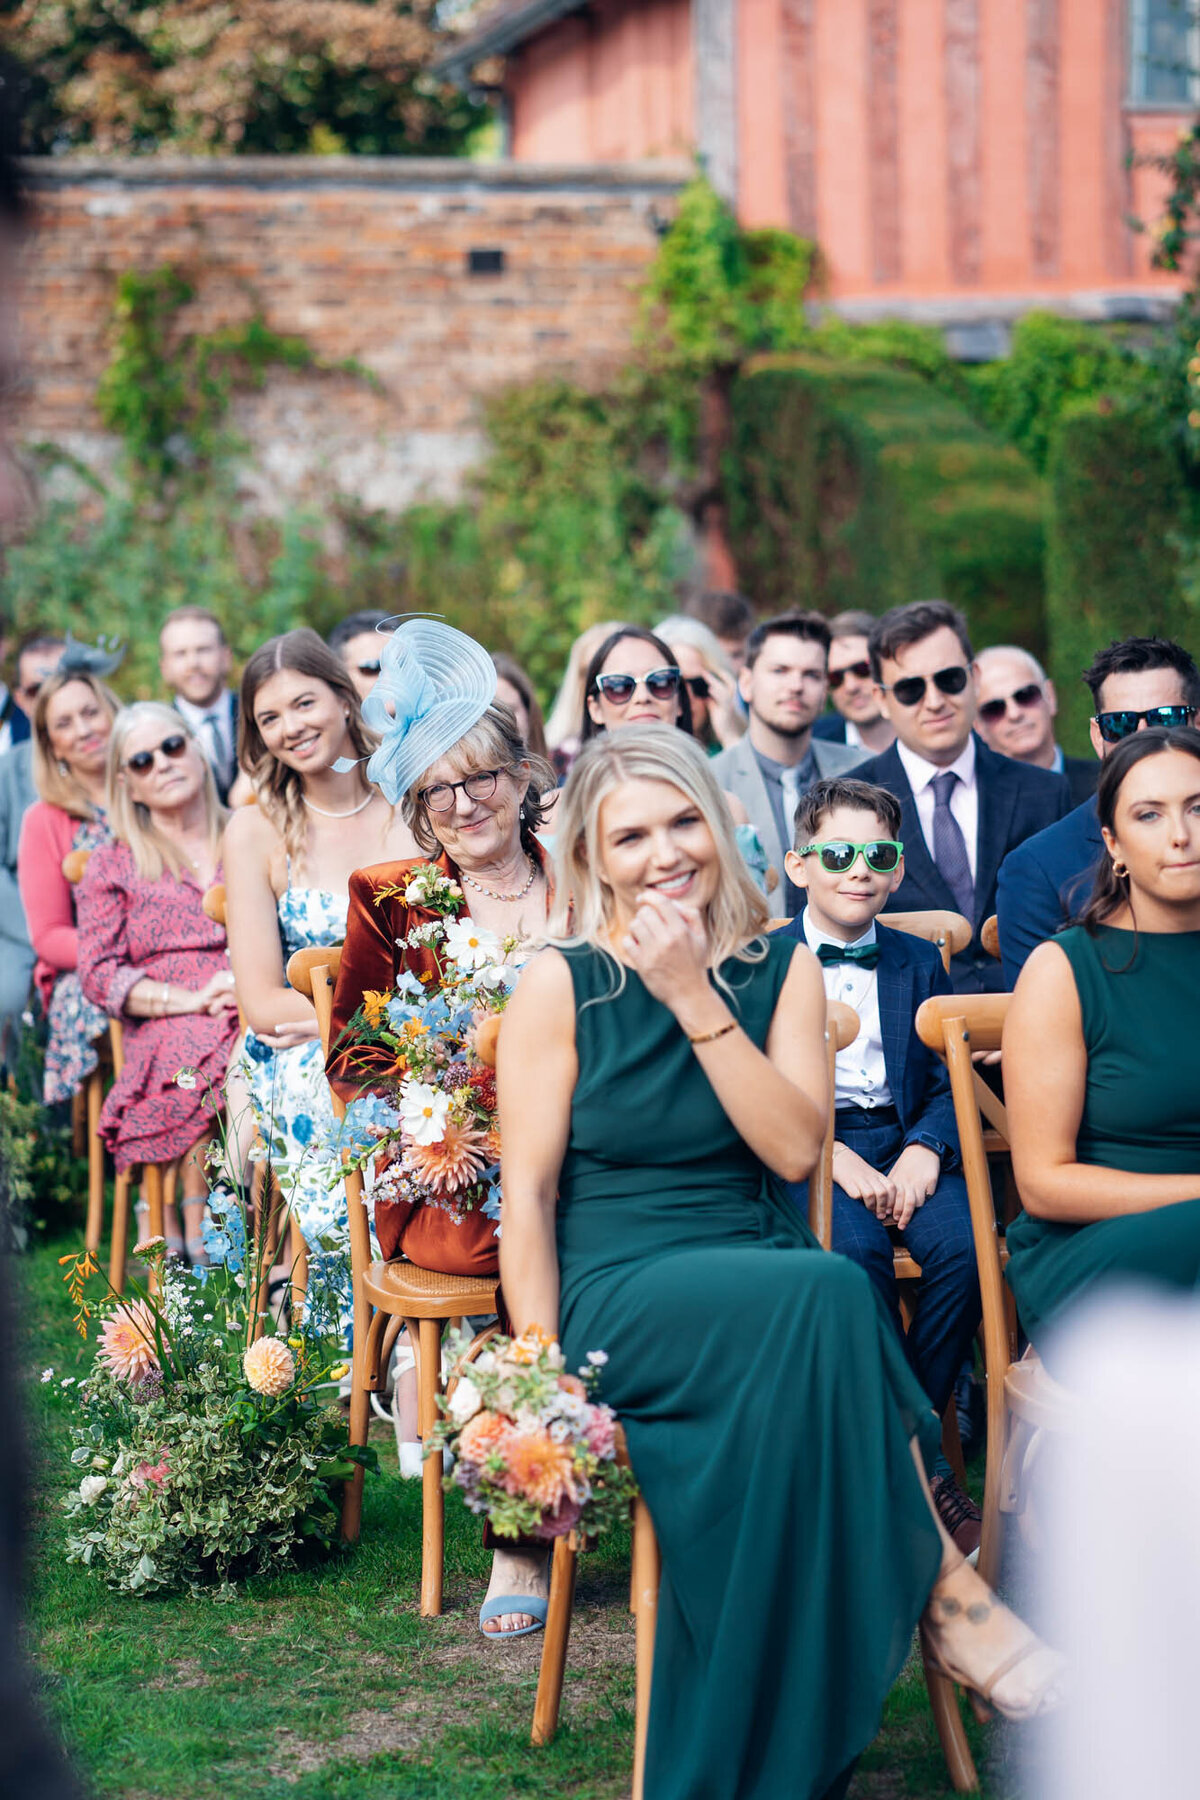 Pauntley-court-wedding-photographer-bridesmaids-during-outdoor-ceremony